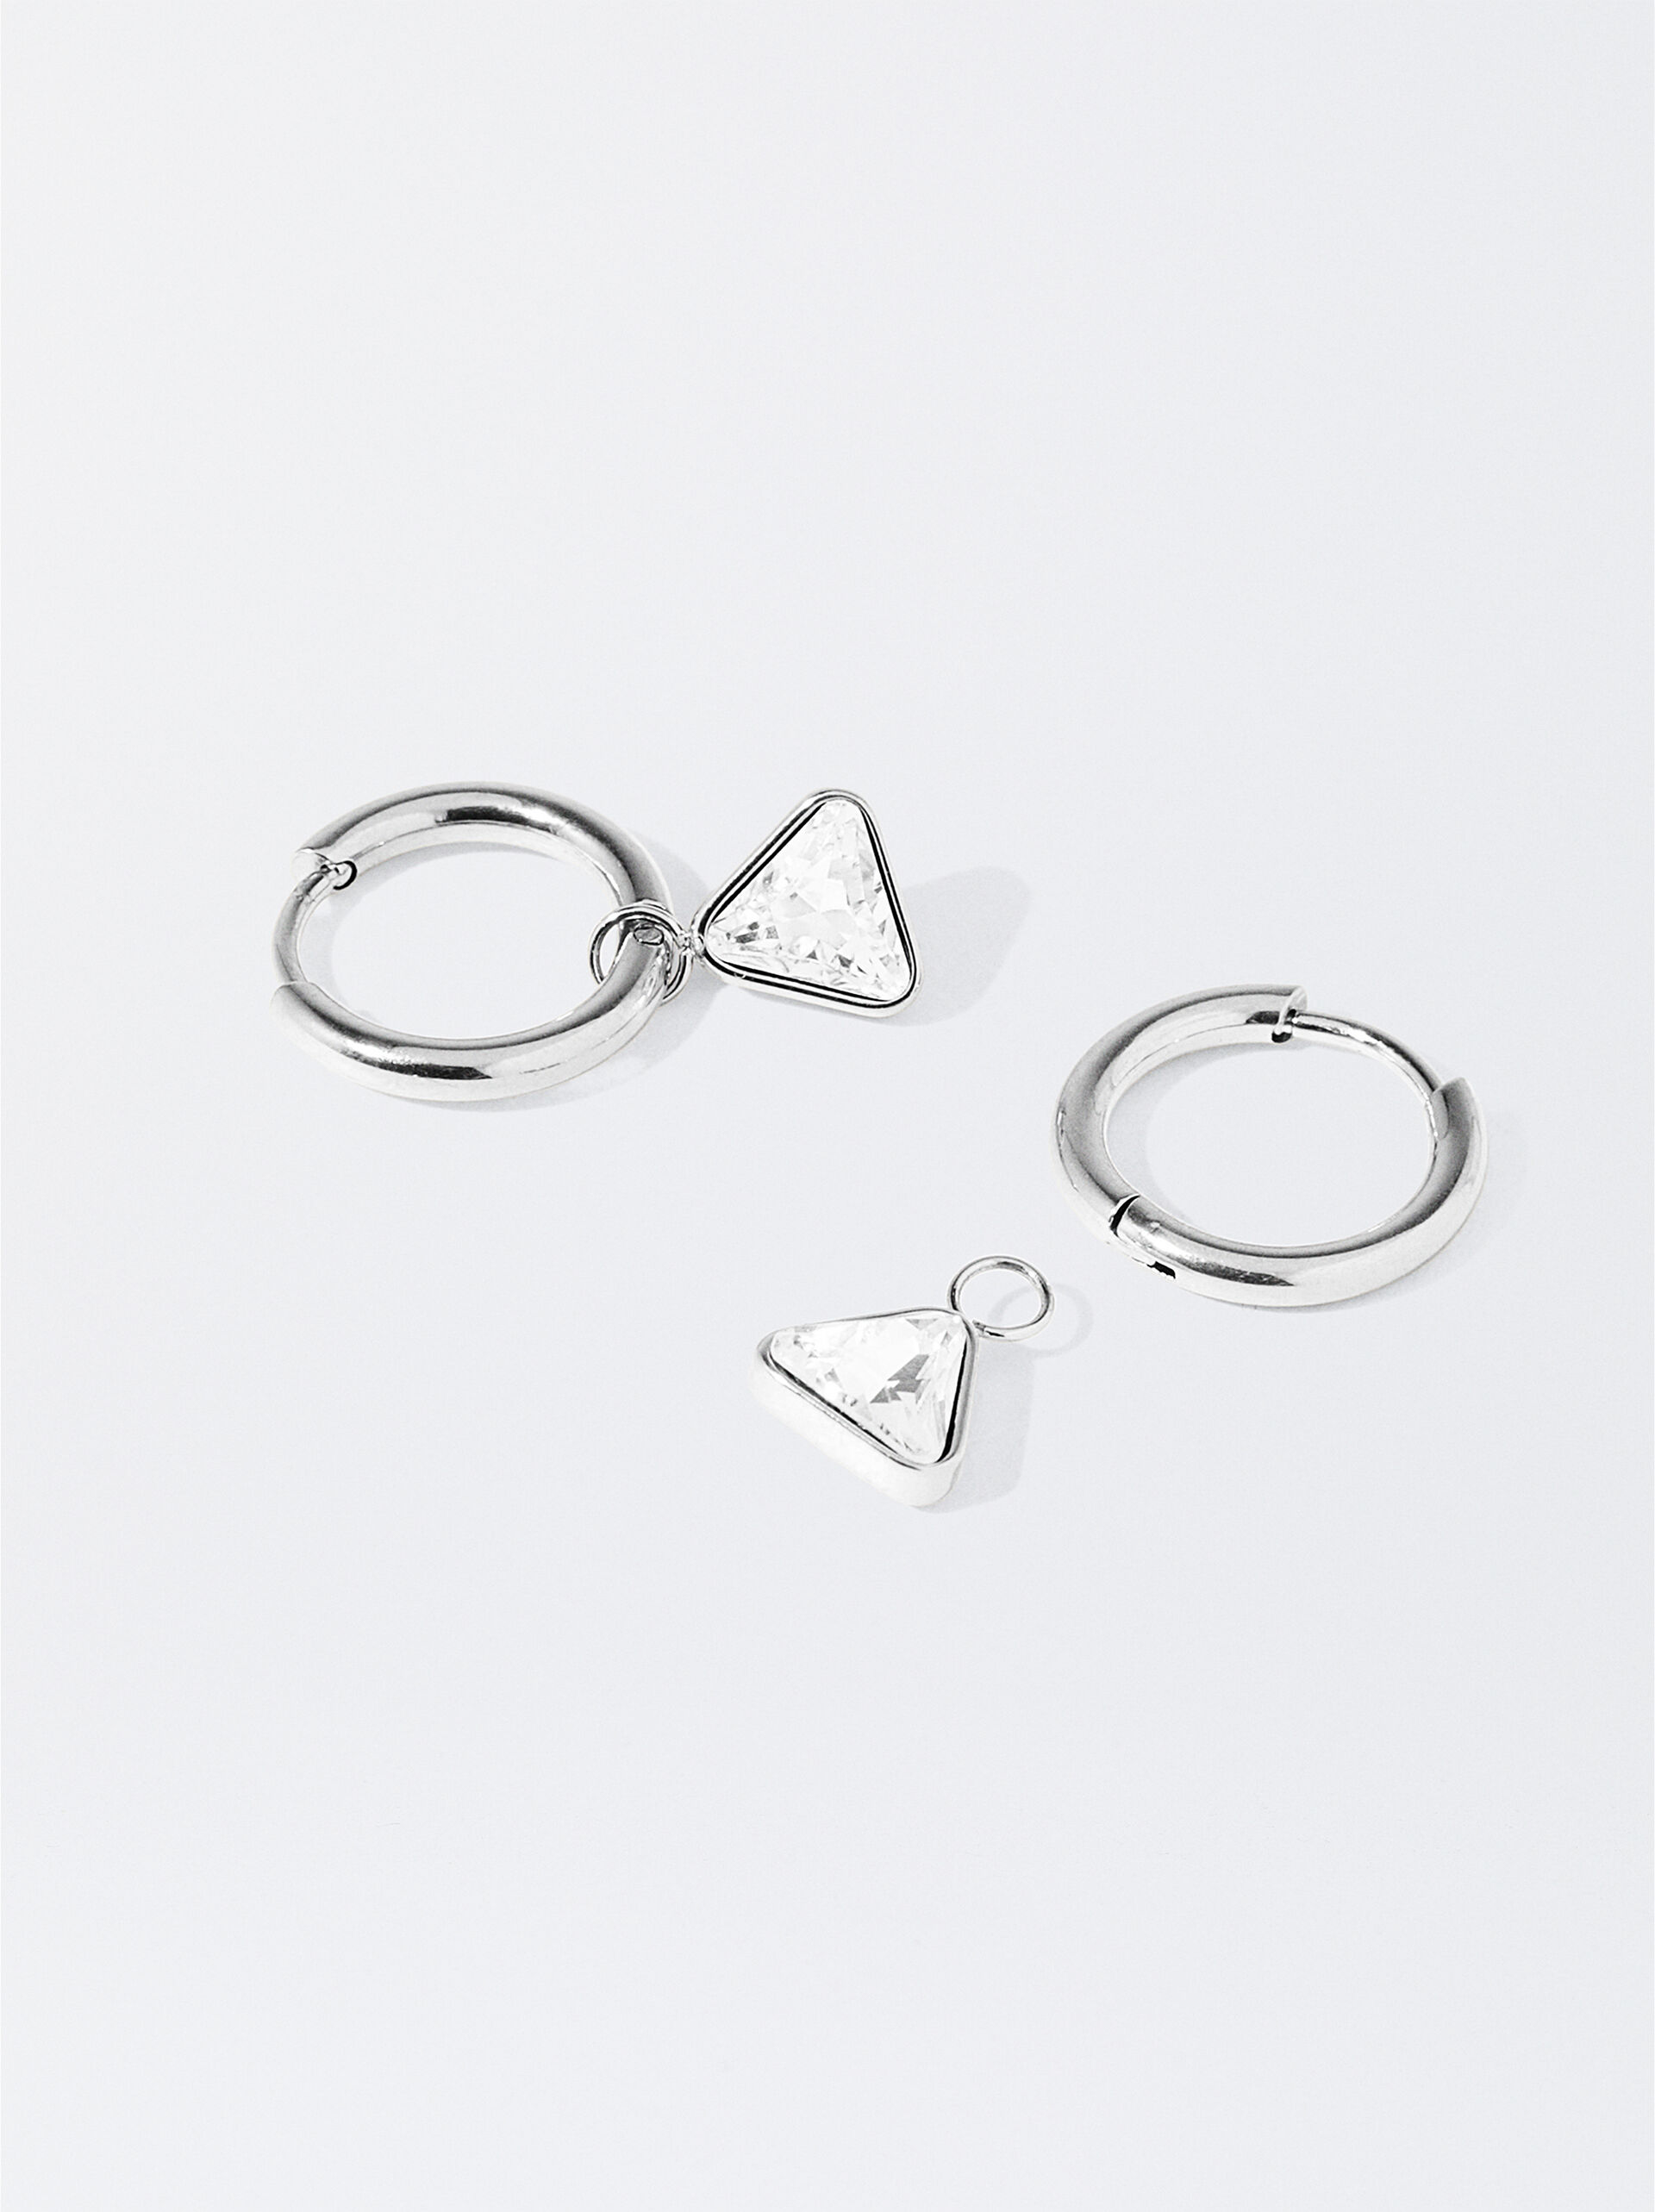 Stainless Steel Hoop Earrings With Crystals image number 2.0